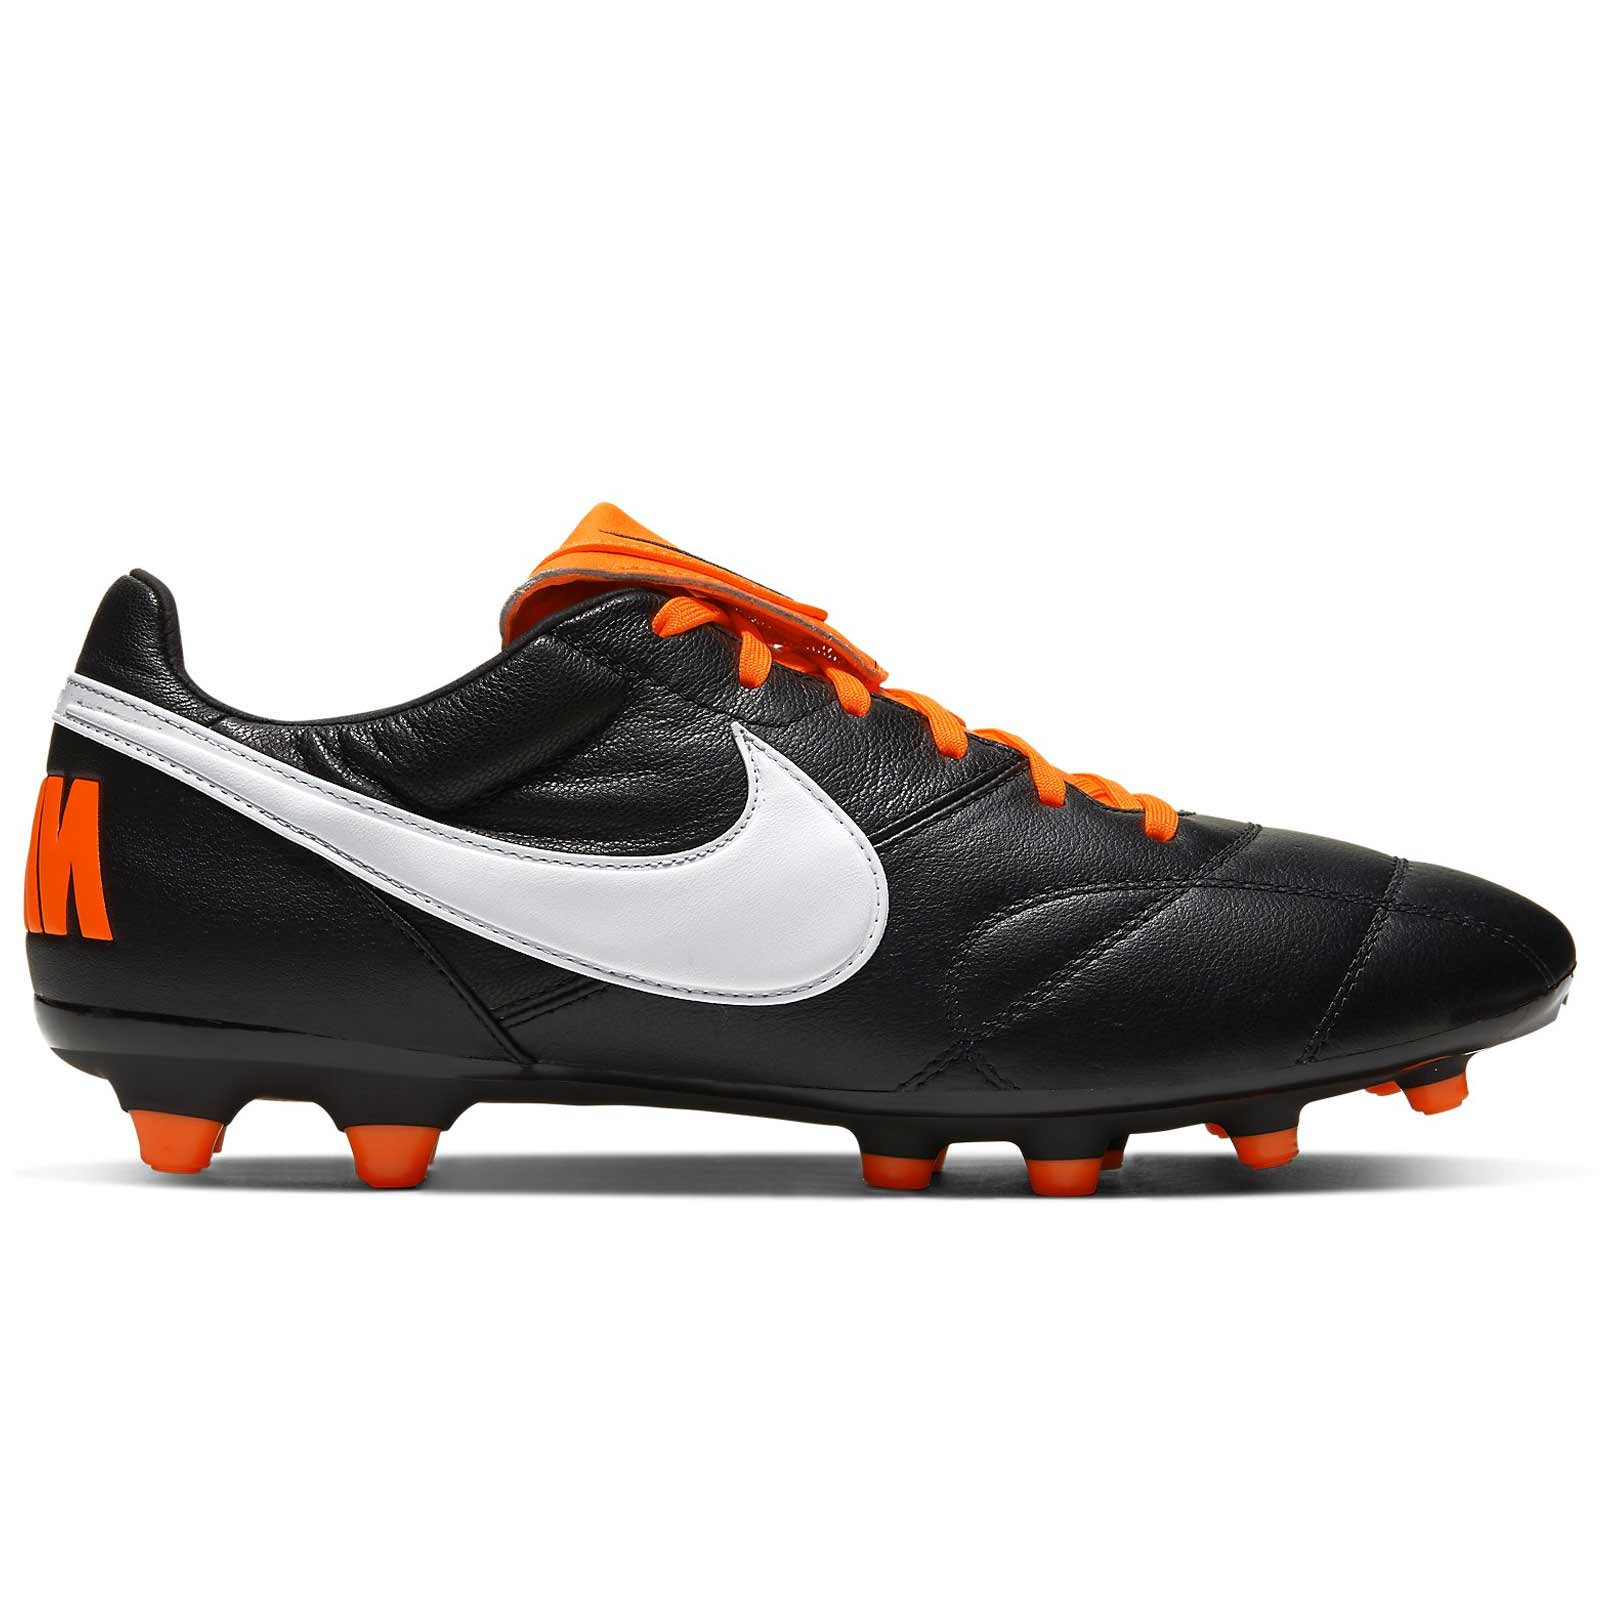 Botas Nike 2 FG negras y naranjas | futbolmania